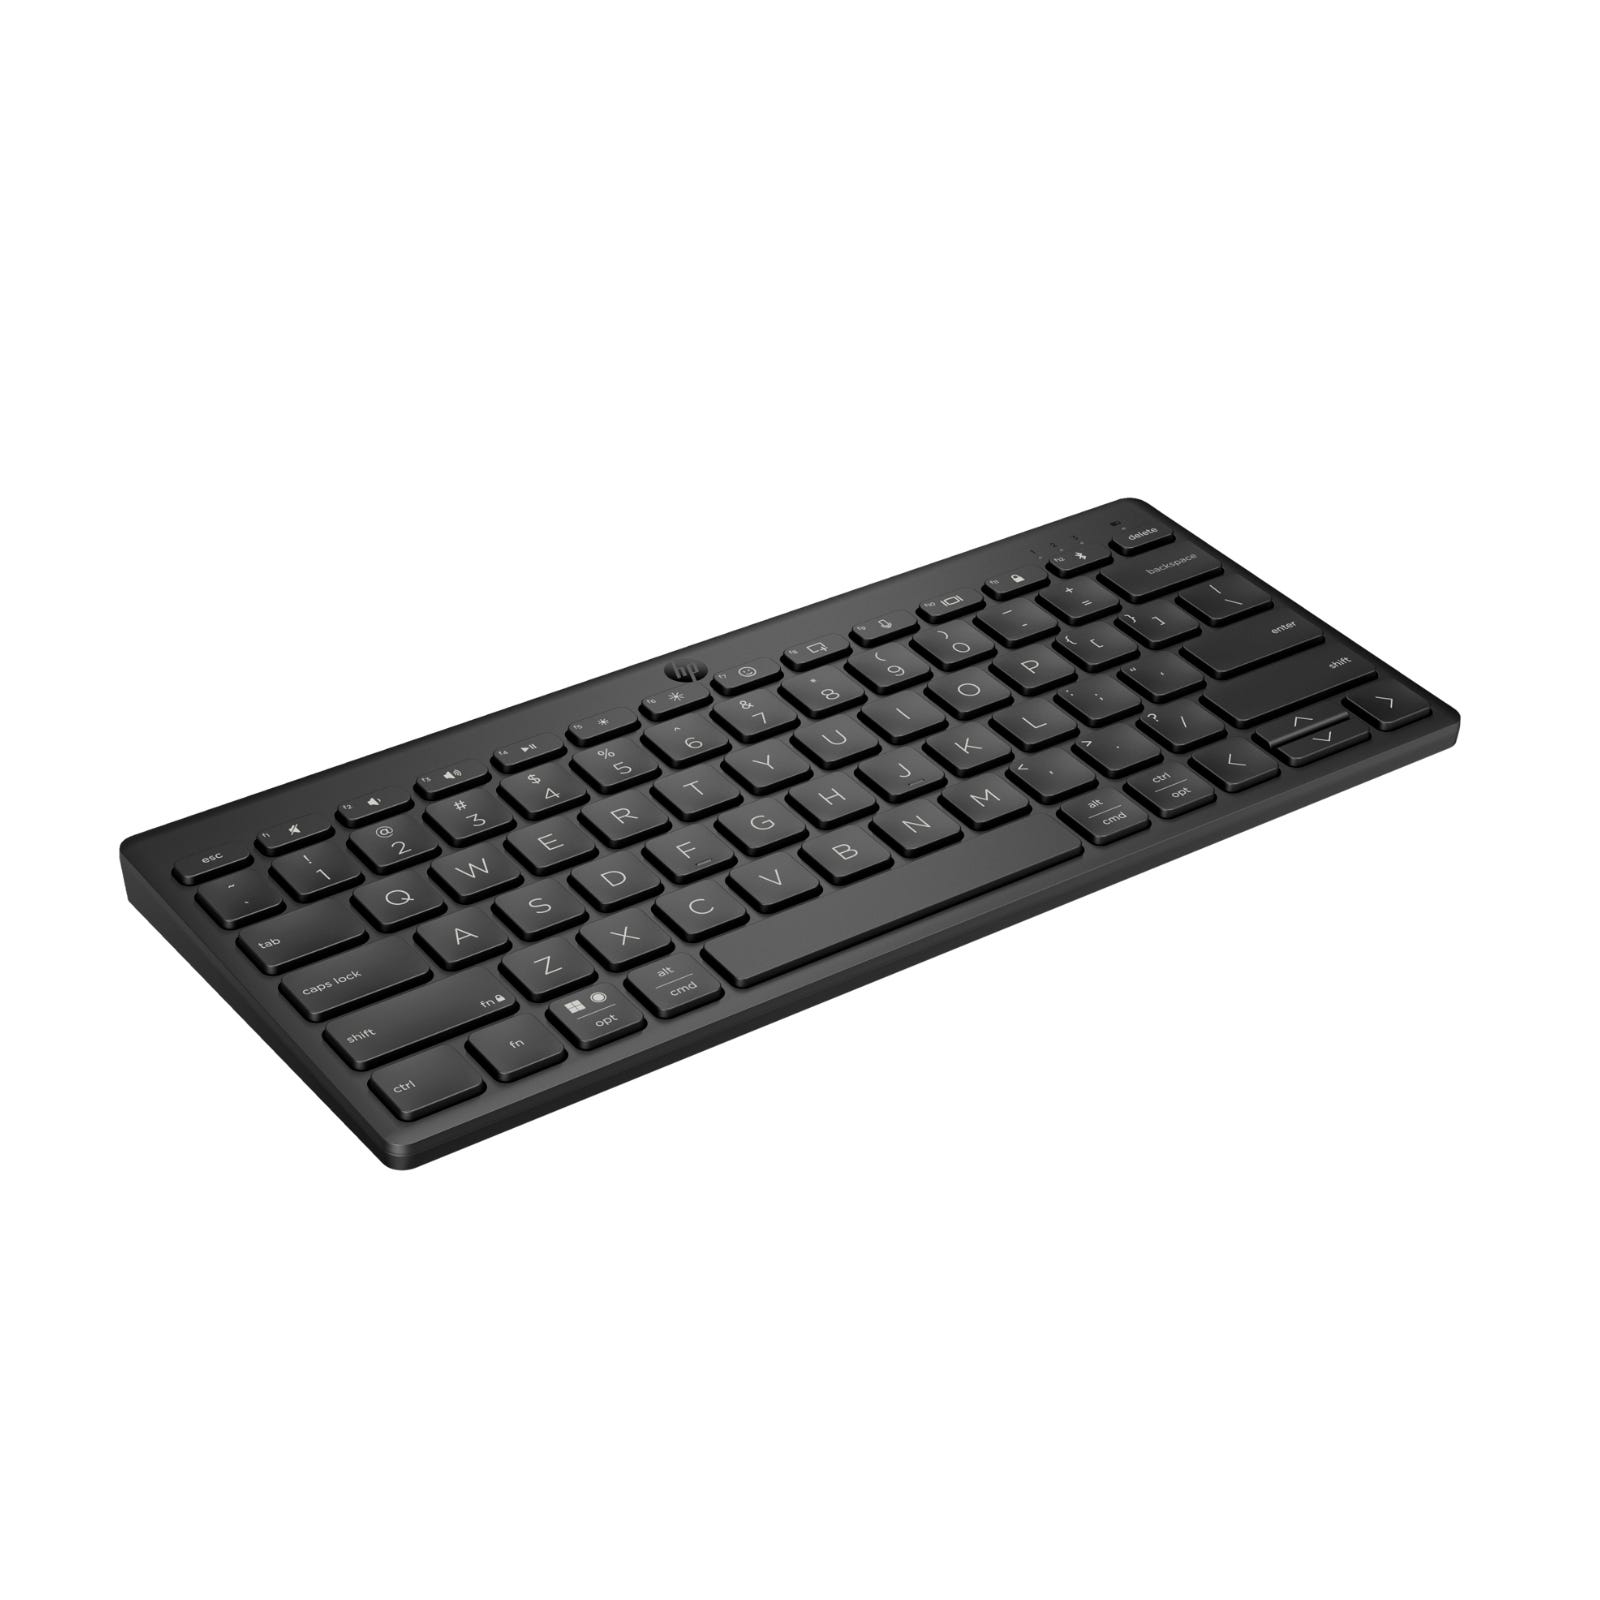 Wireless black computer keyboard with a modern design.